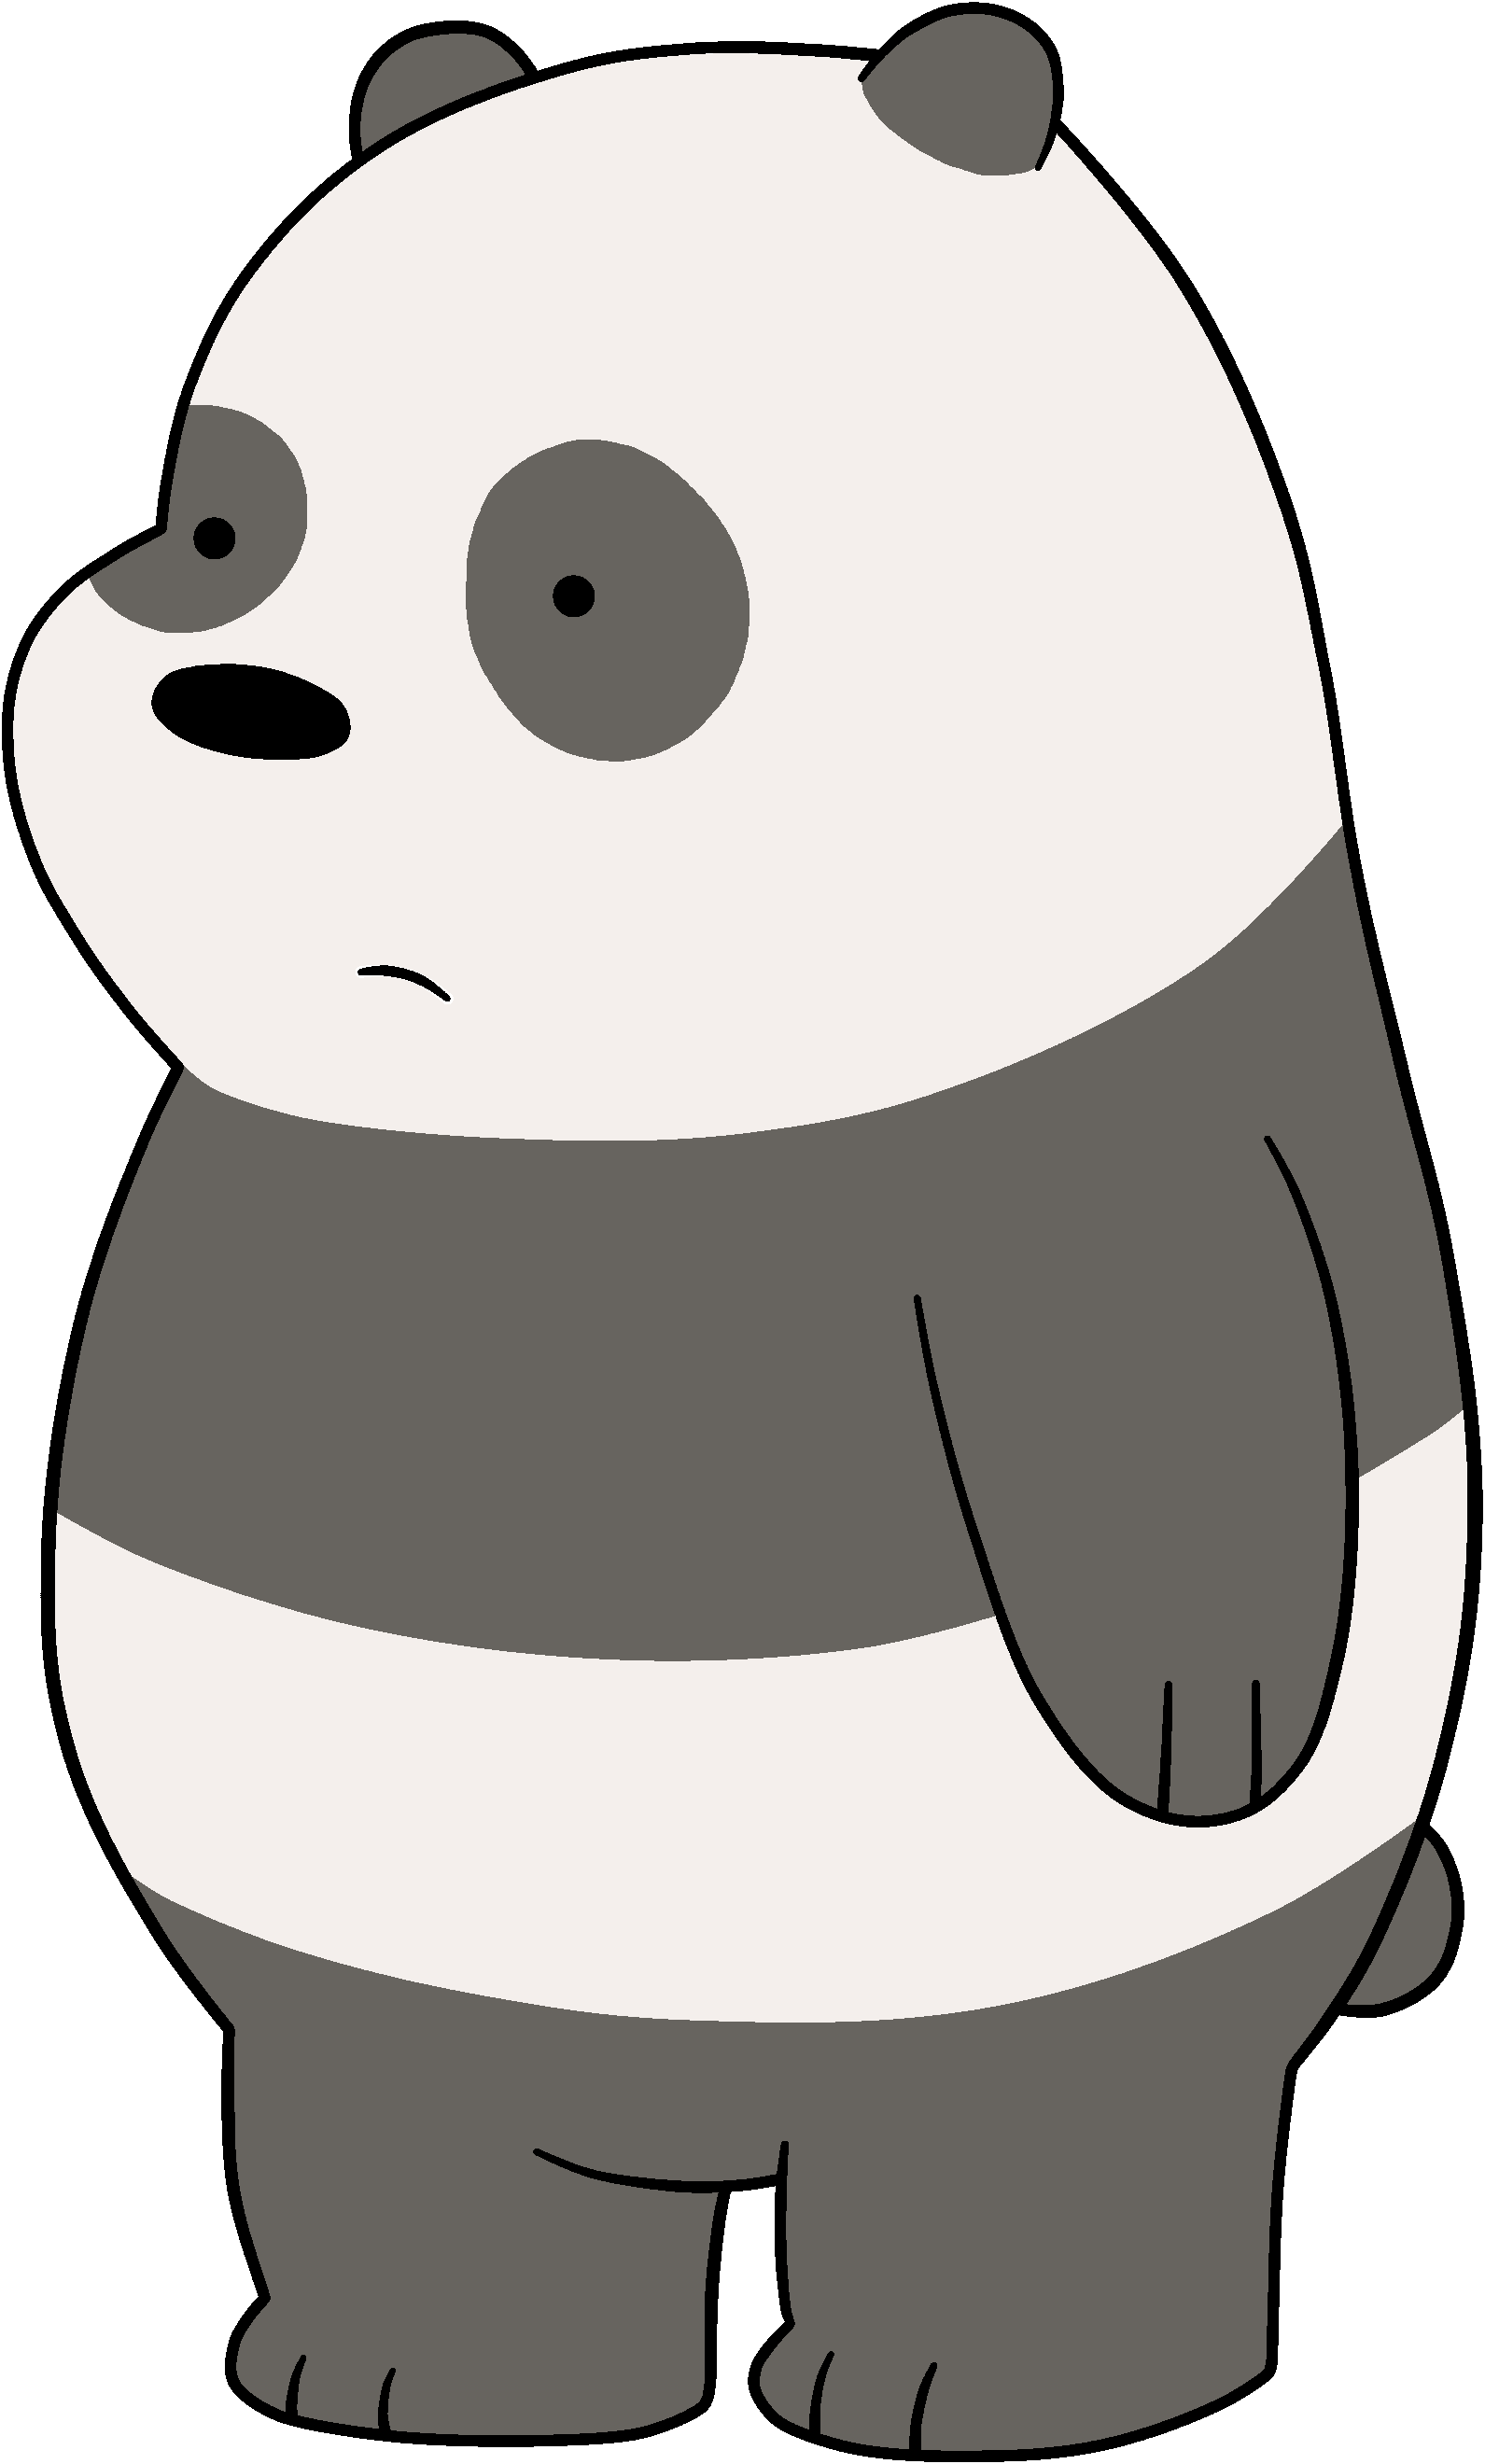 anime panda bear